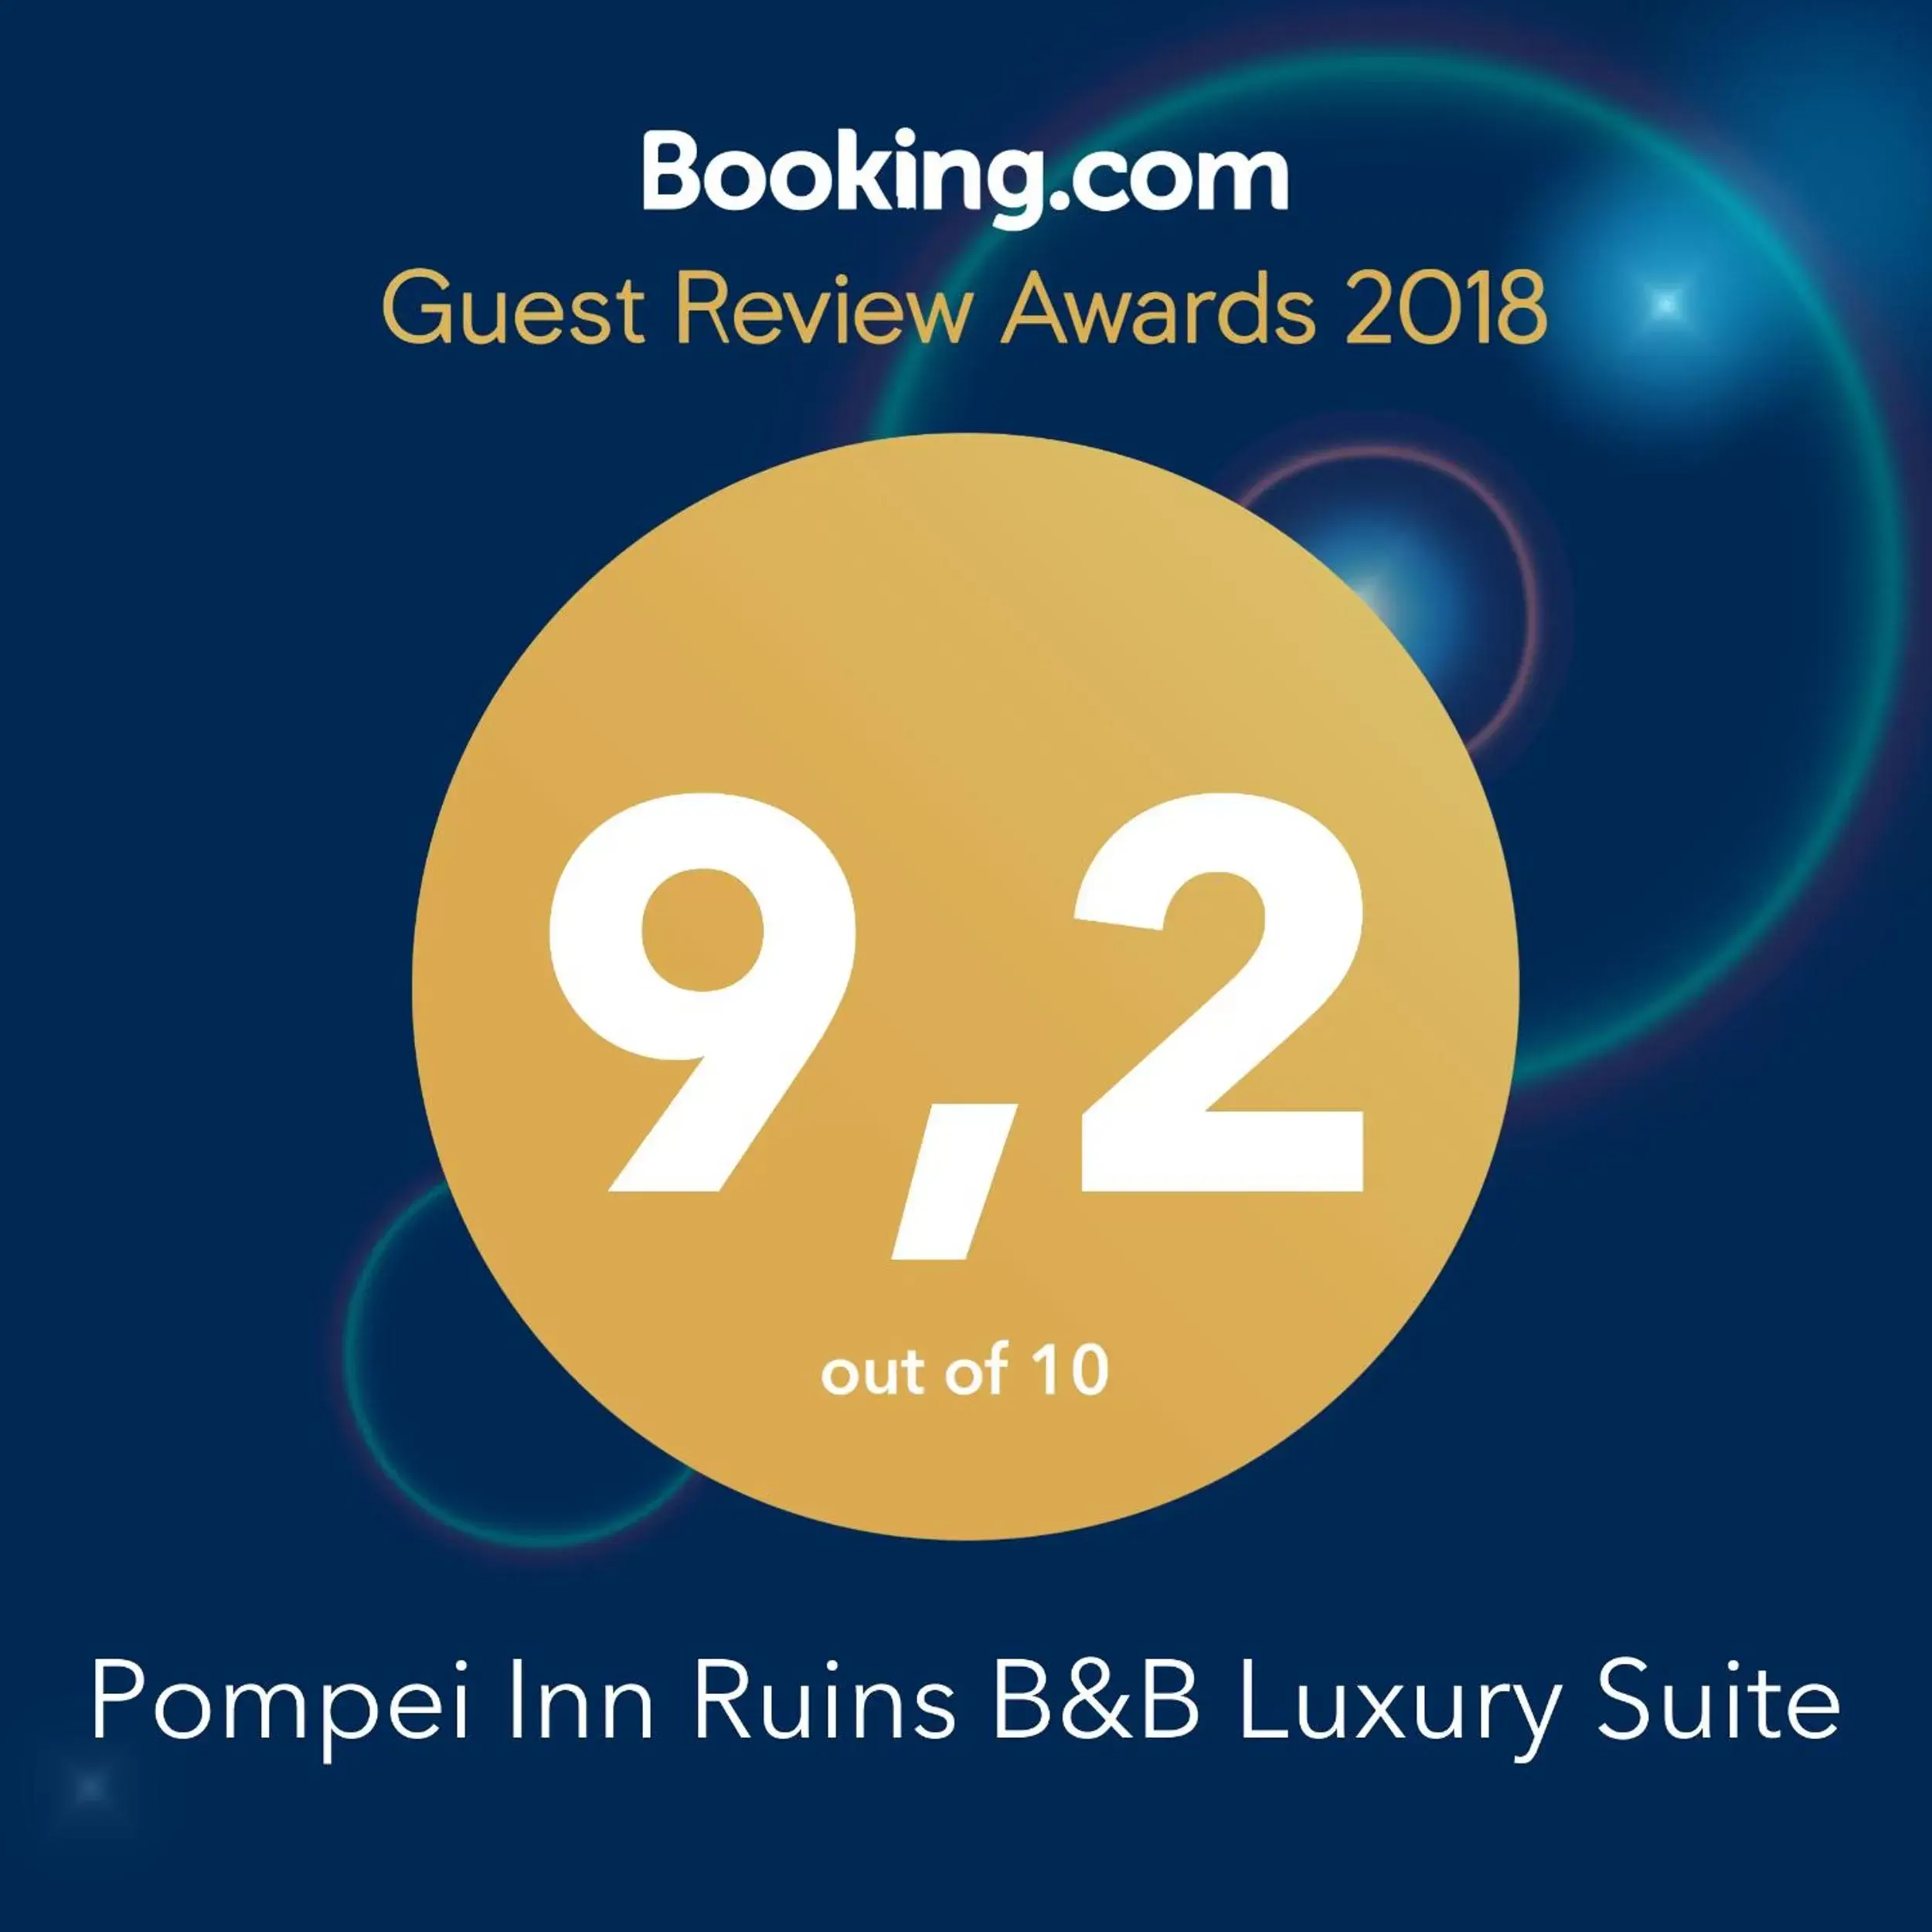 Pompei Inn Ruins B&B Luxury Suite